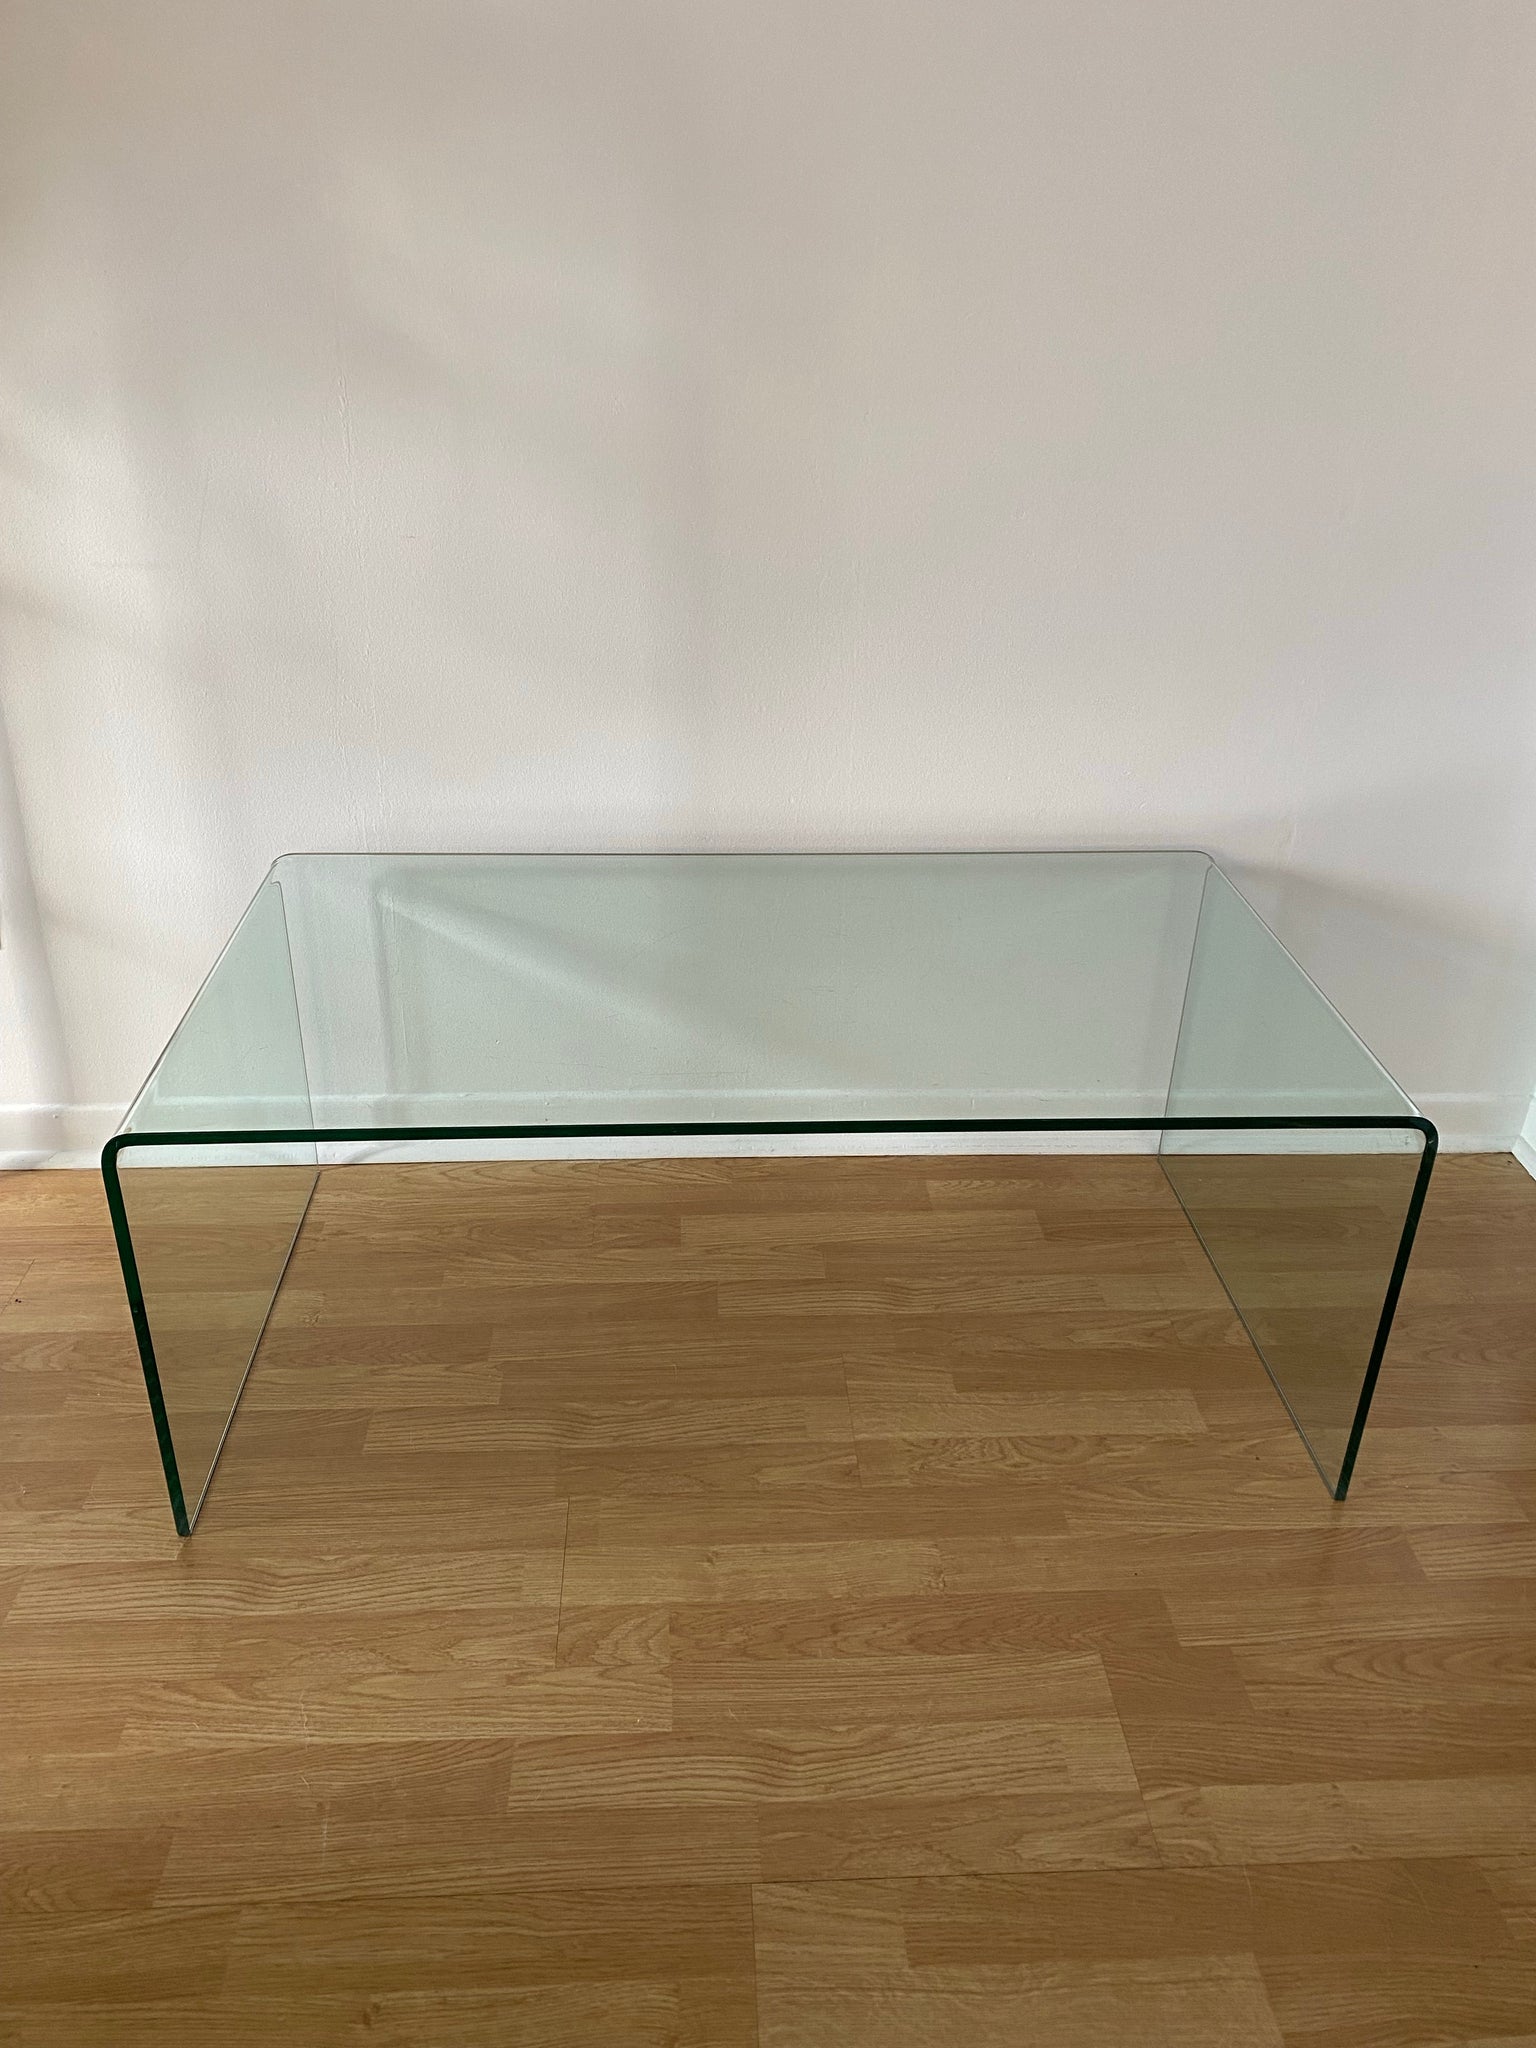 Beautiful tempered glass waterfall coffee table